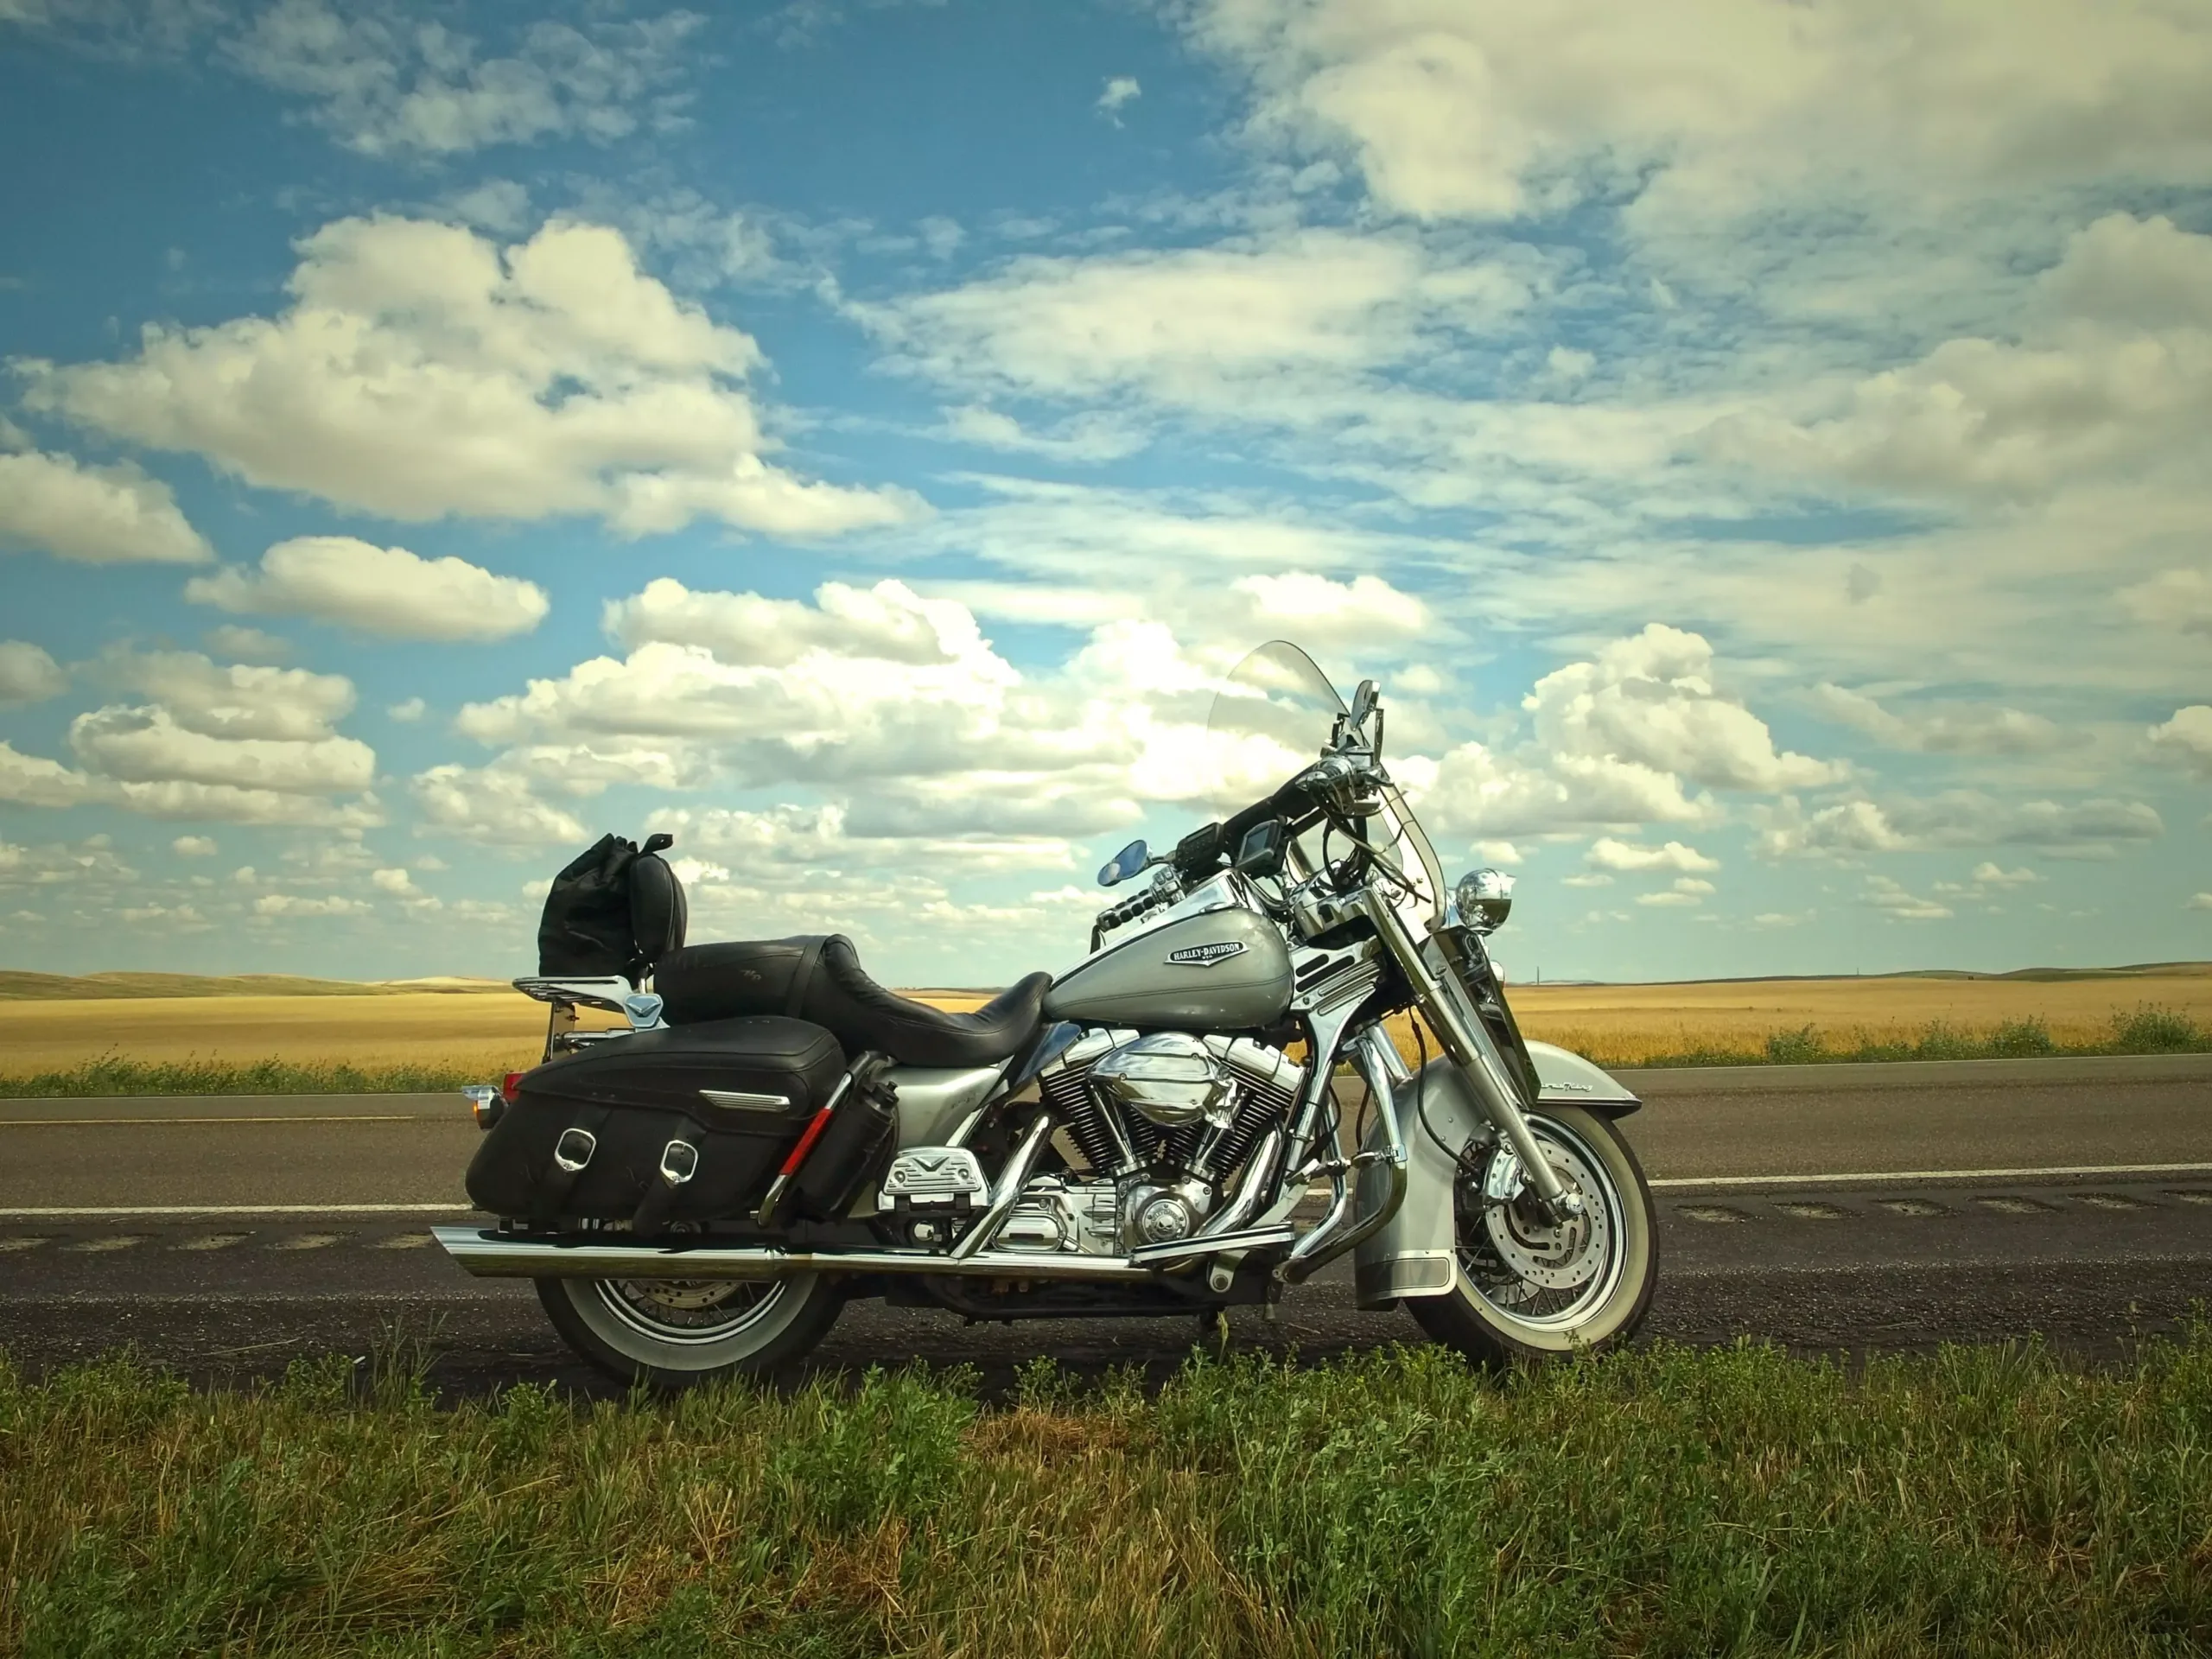 Two motorcyclists riding near Sturgis, South Dakota